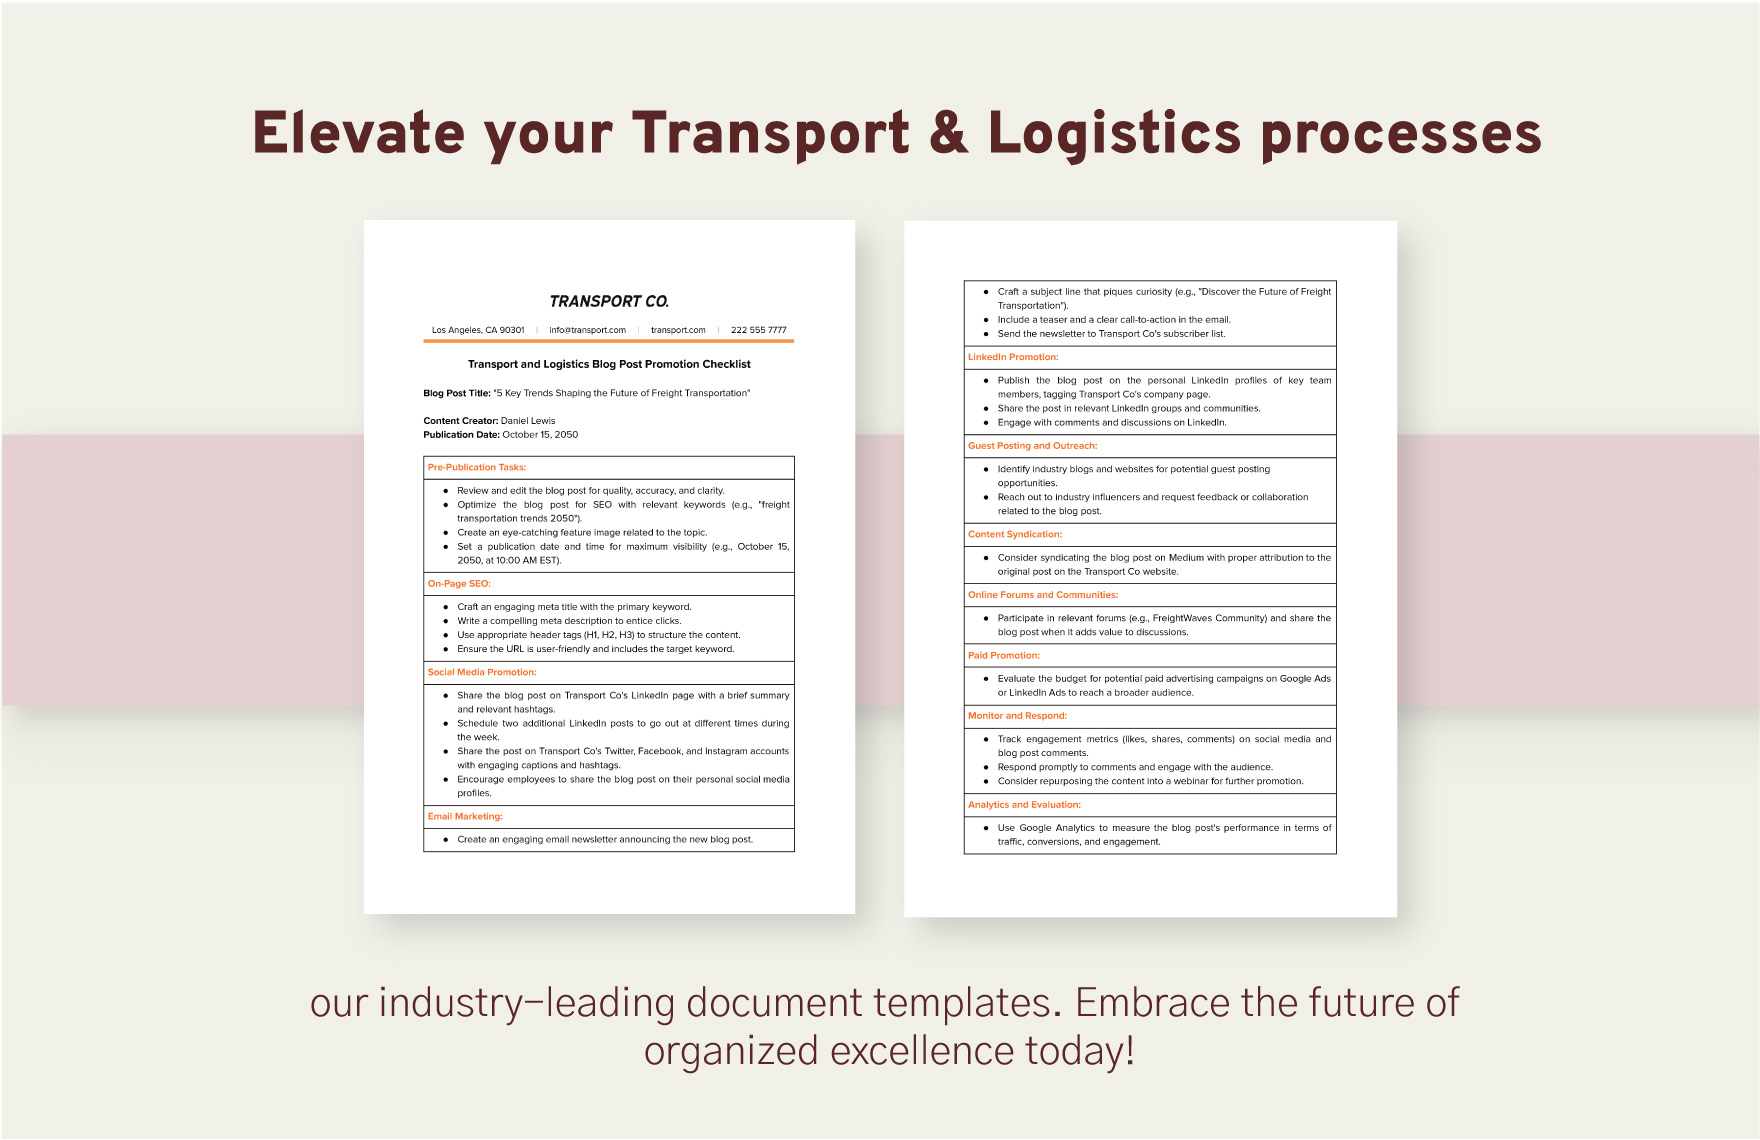 Transport and Logistics Blog Post Promotion Checklist Template